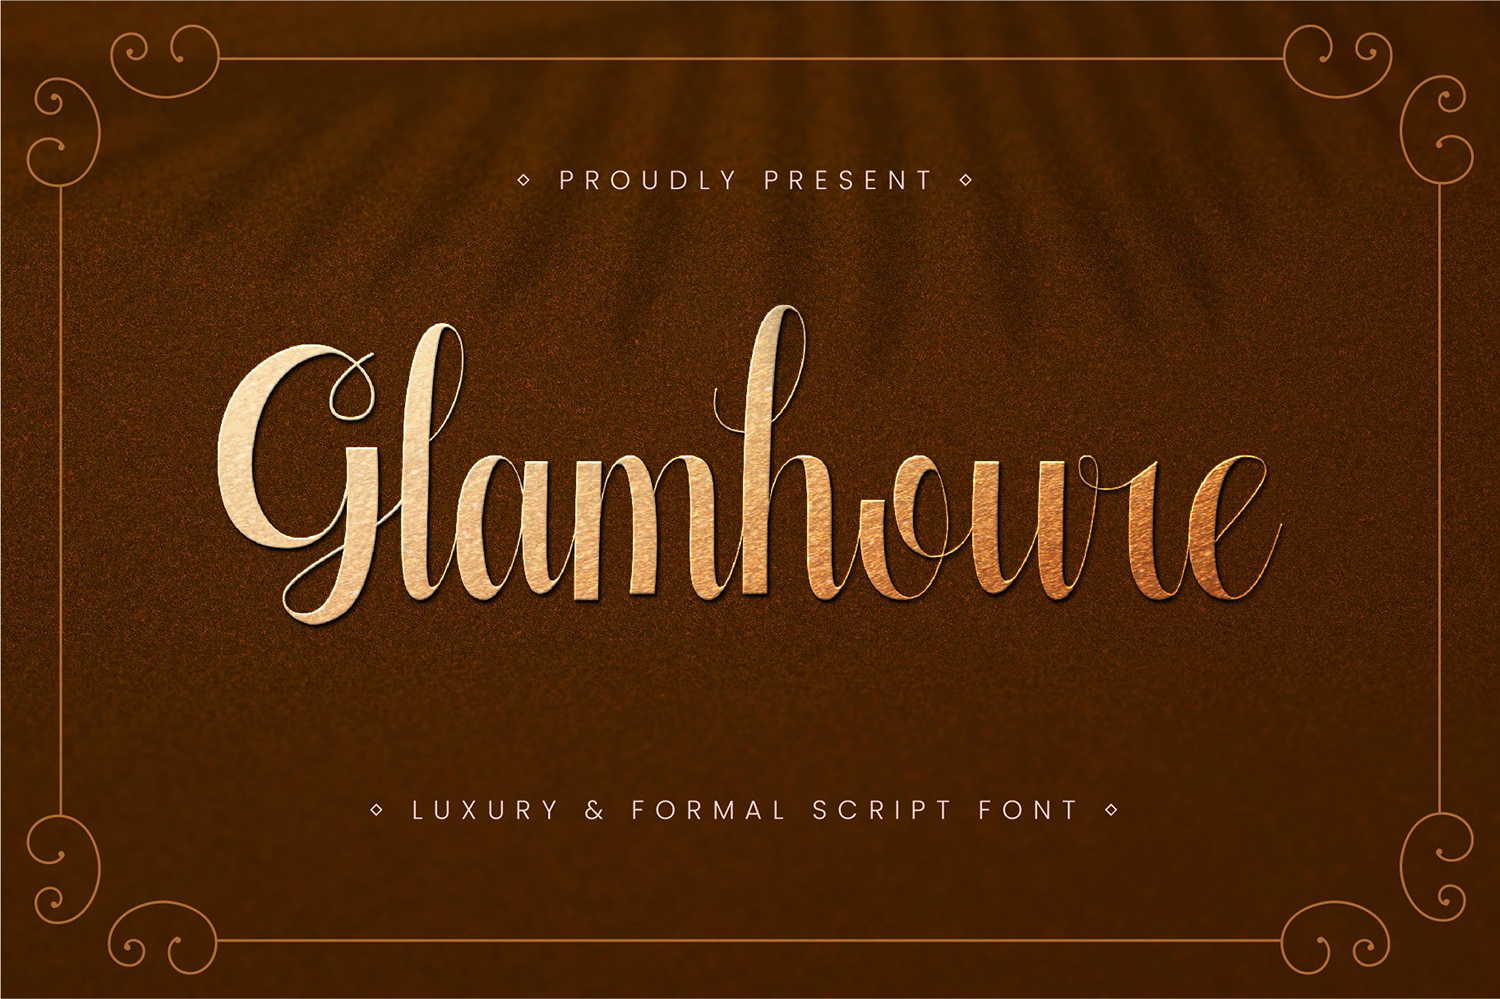 Glamhoure Free Font